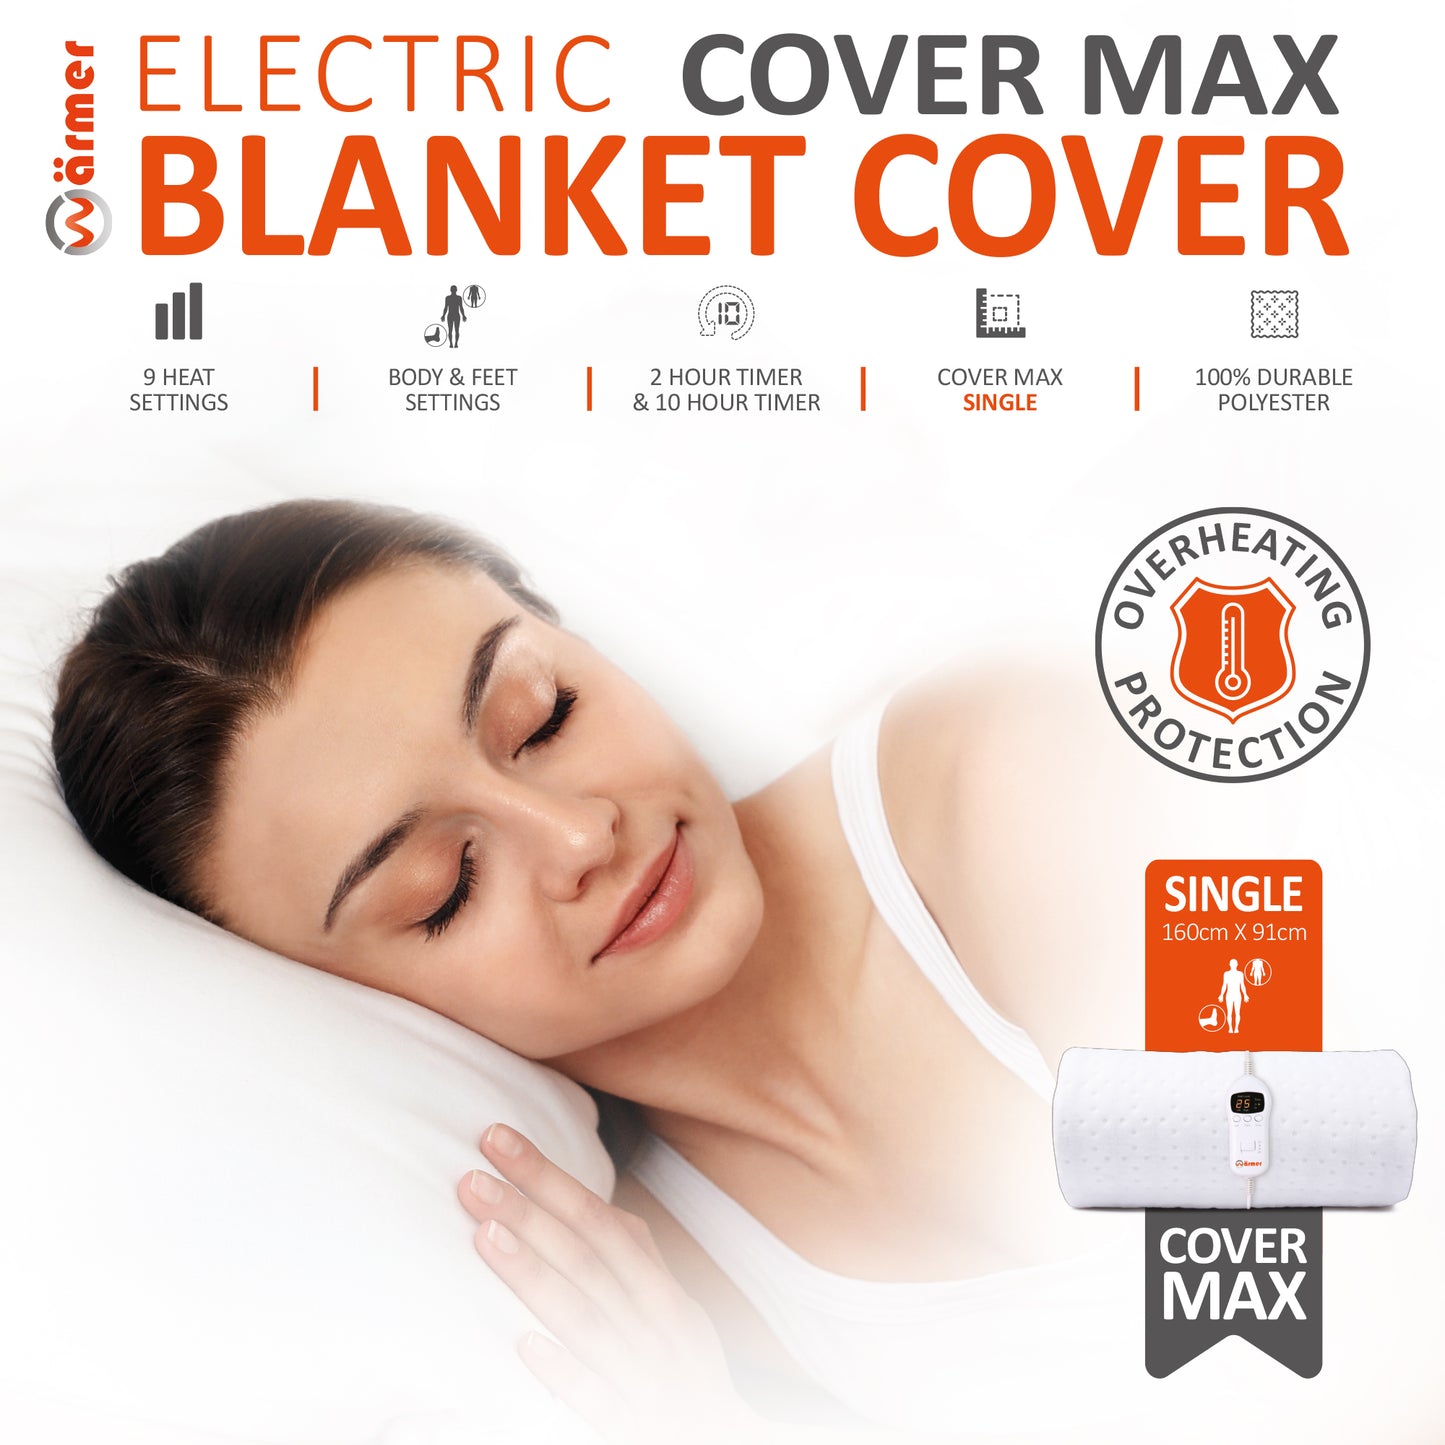 Wärmer Cover Max Electric Blanket